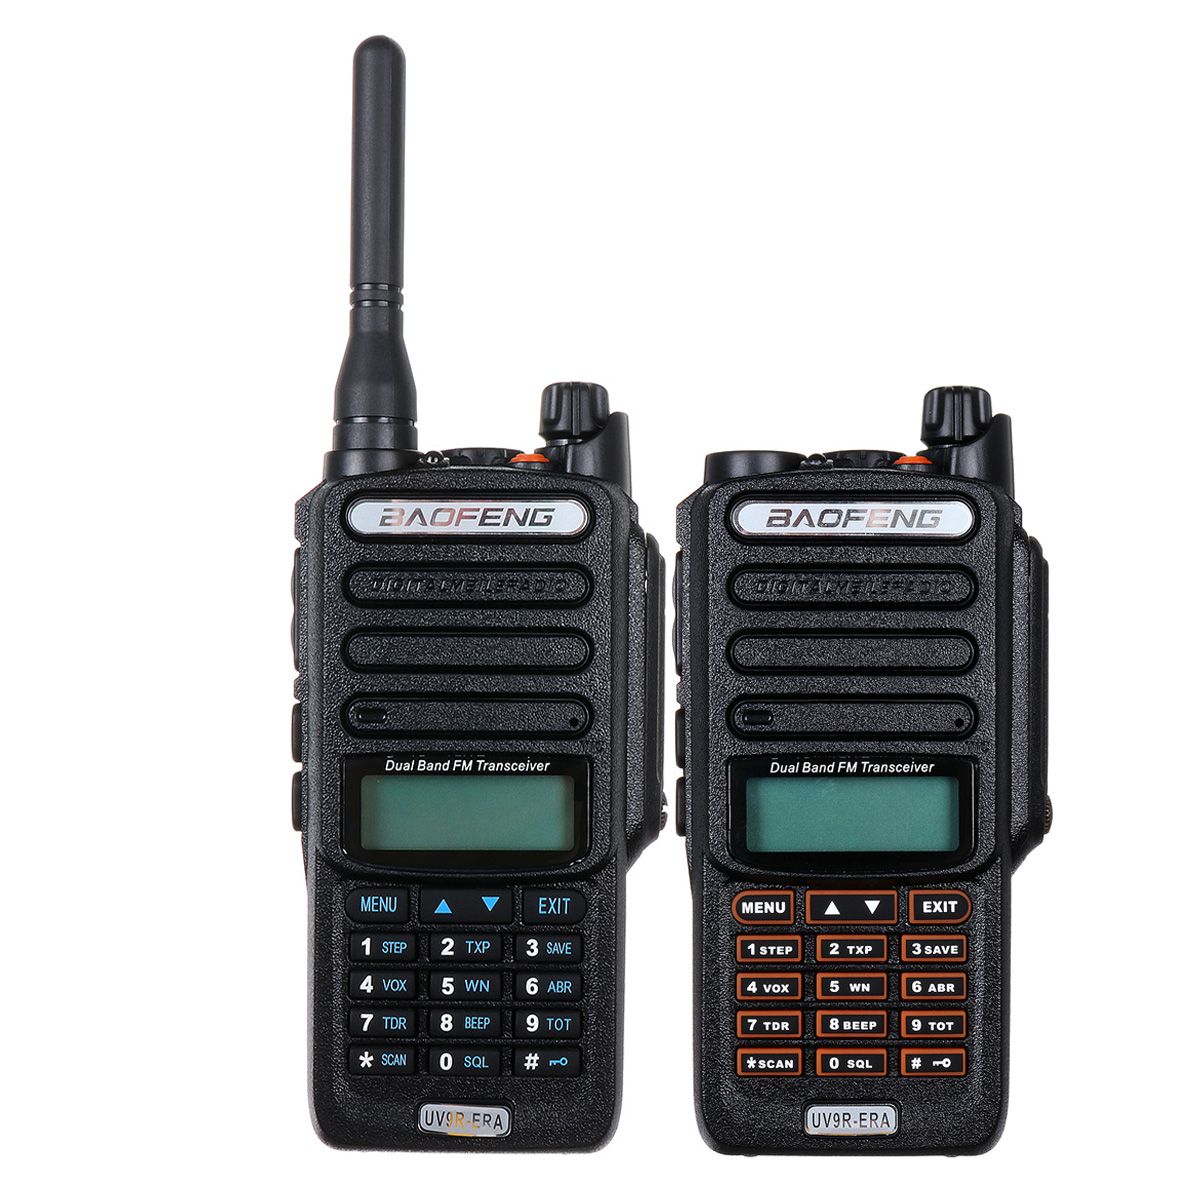 Baofeng-UV9R-ERA-Walkie-Talkie-128-Channel-9500mAh-10W-VHF-UHF-Handheld-Two-Way-Radio-1564126